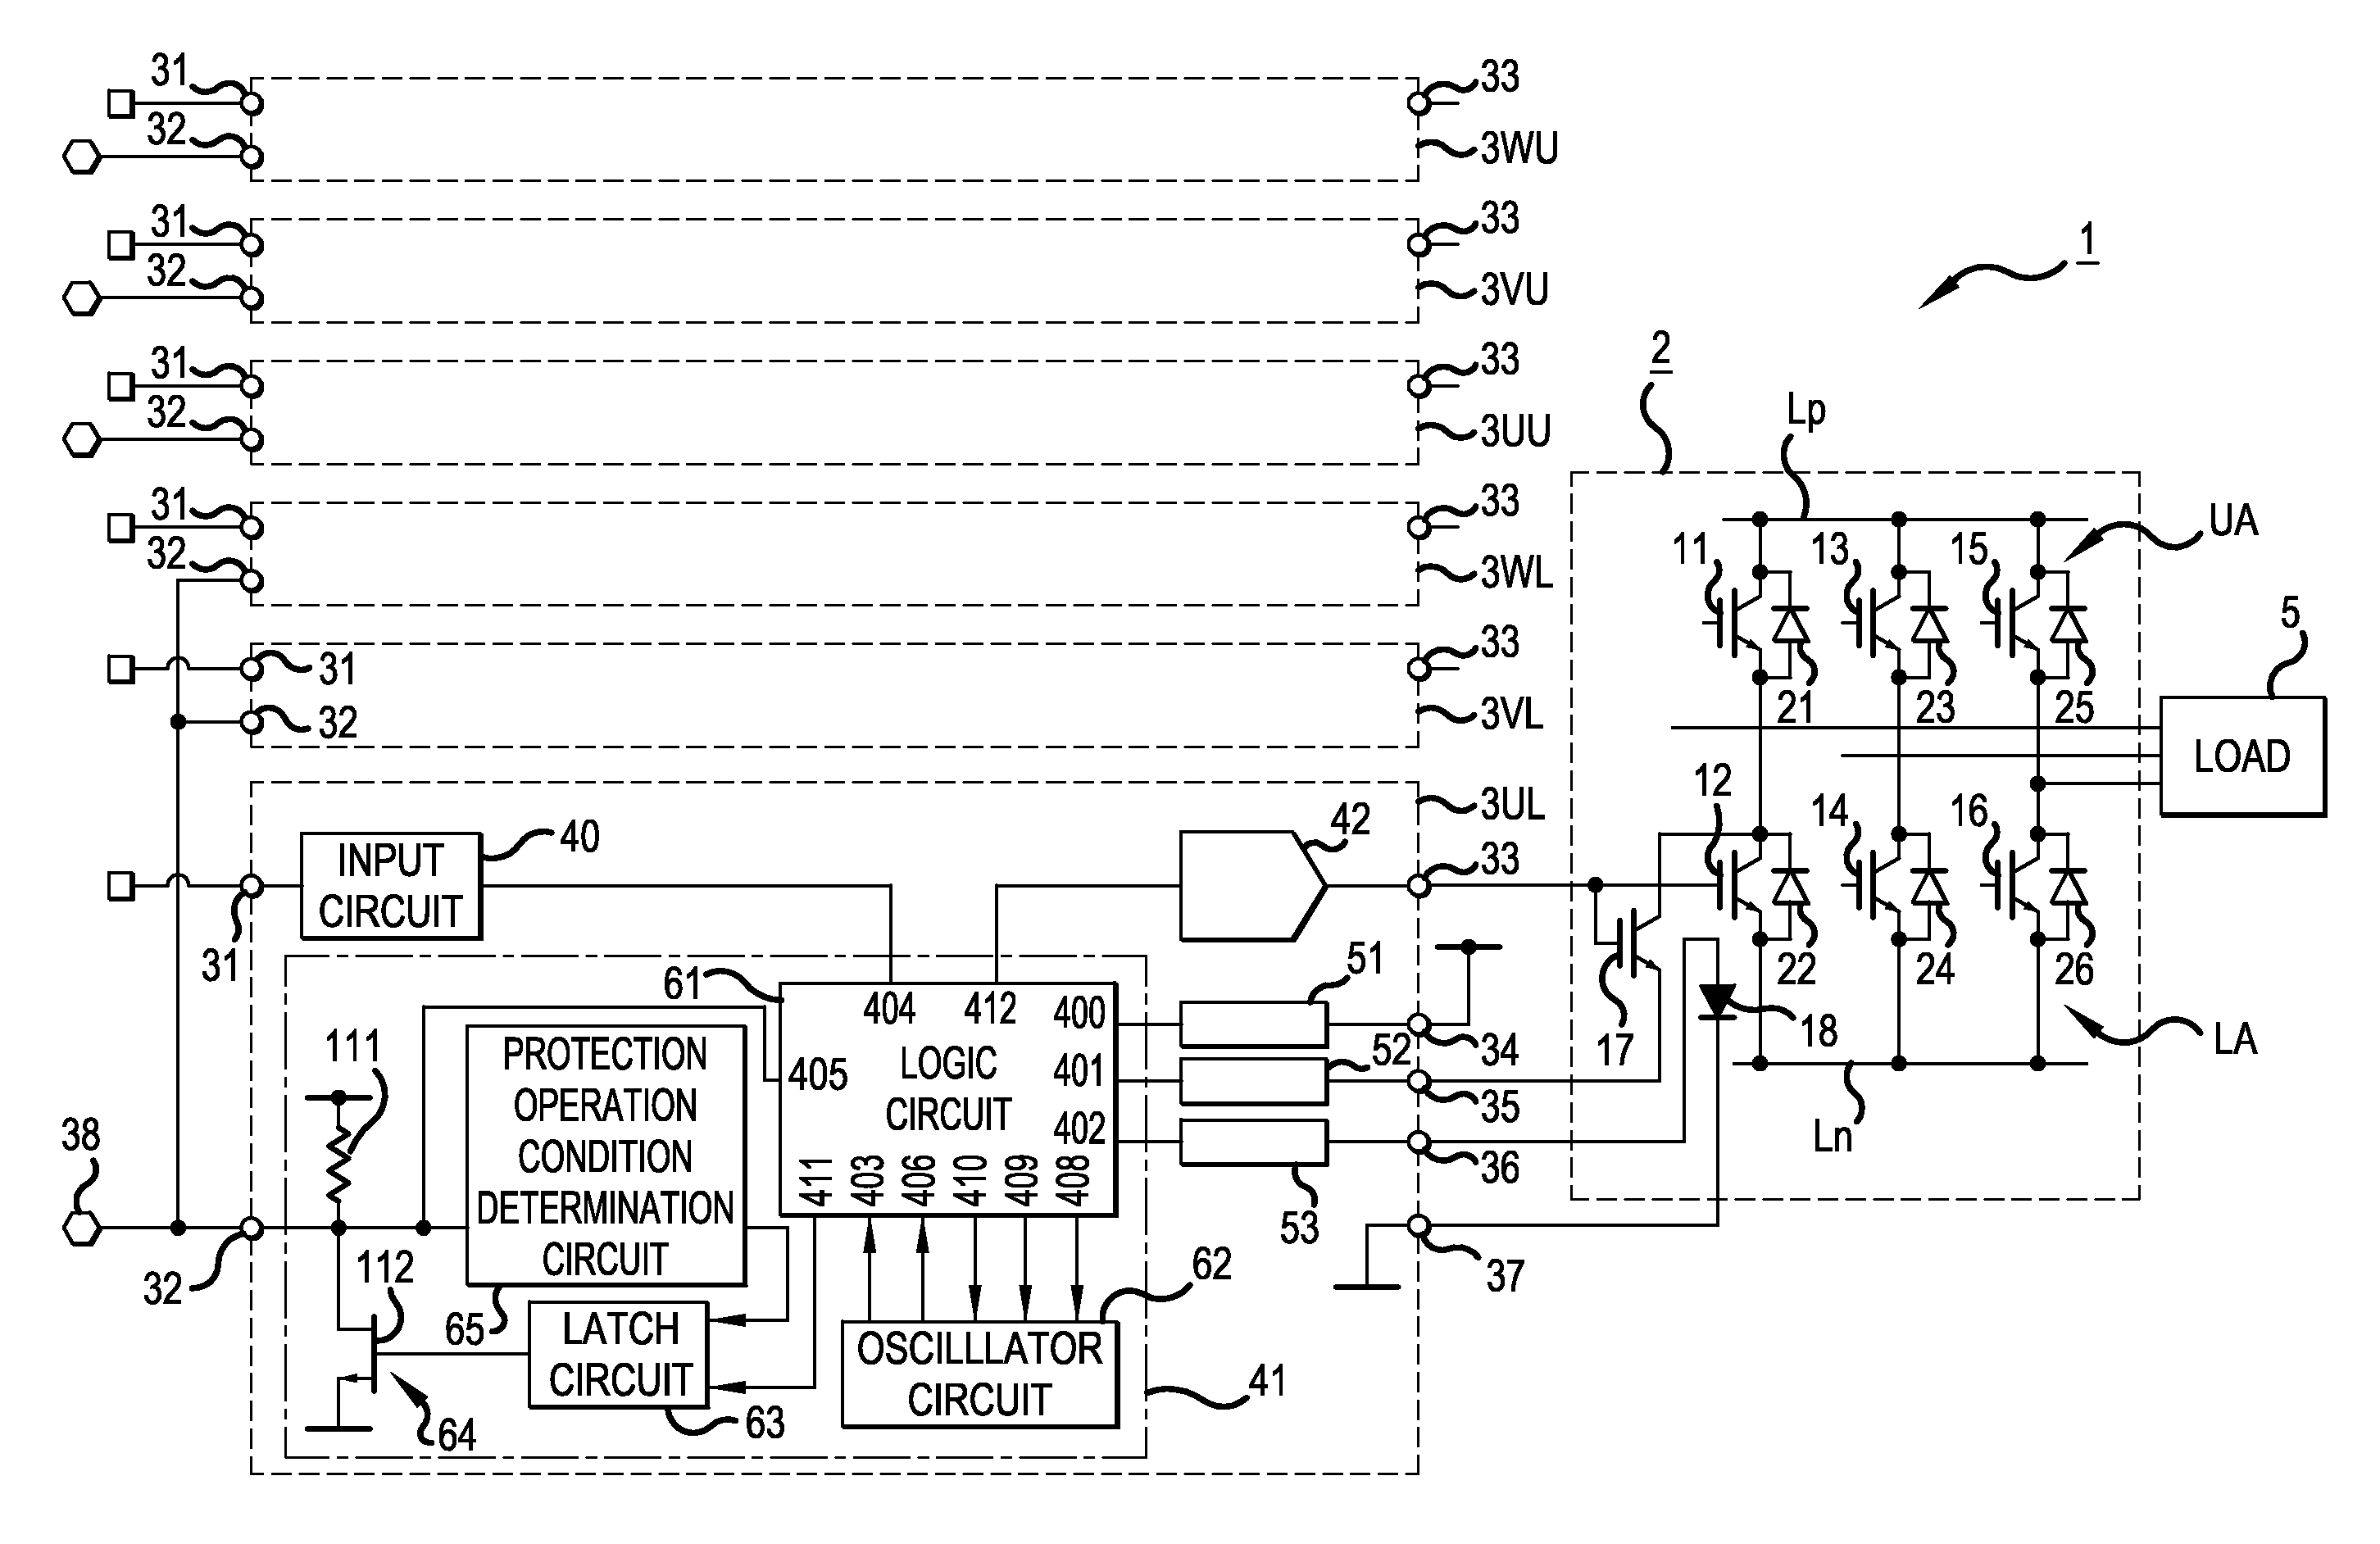 Power conversion device control device